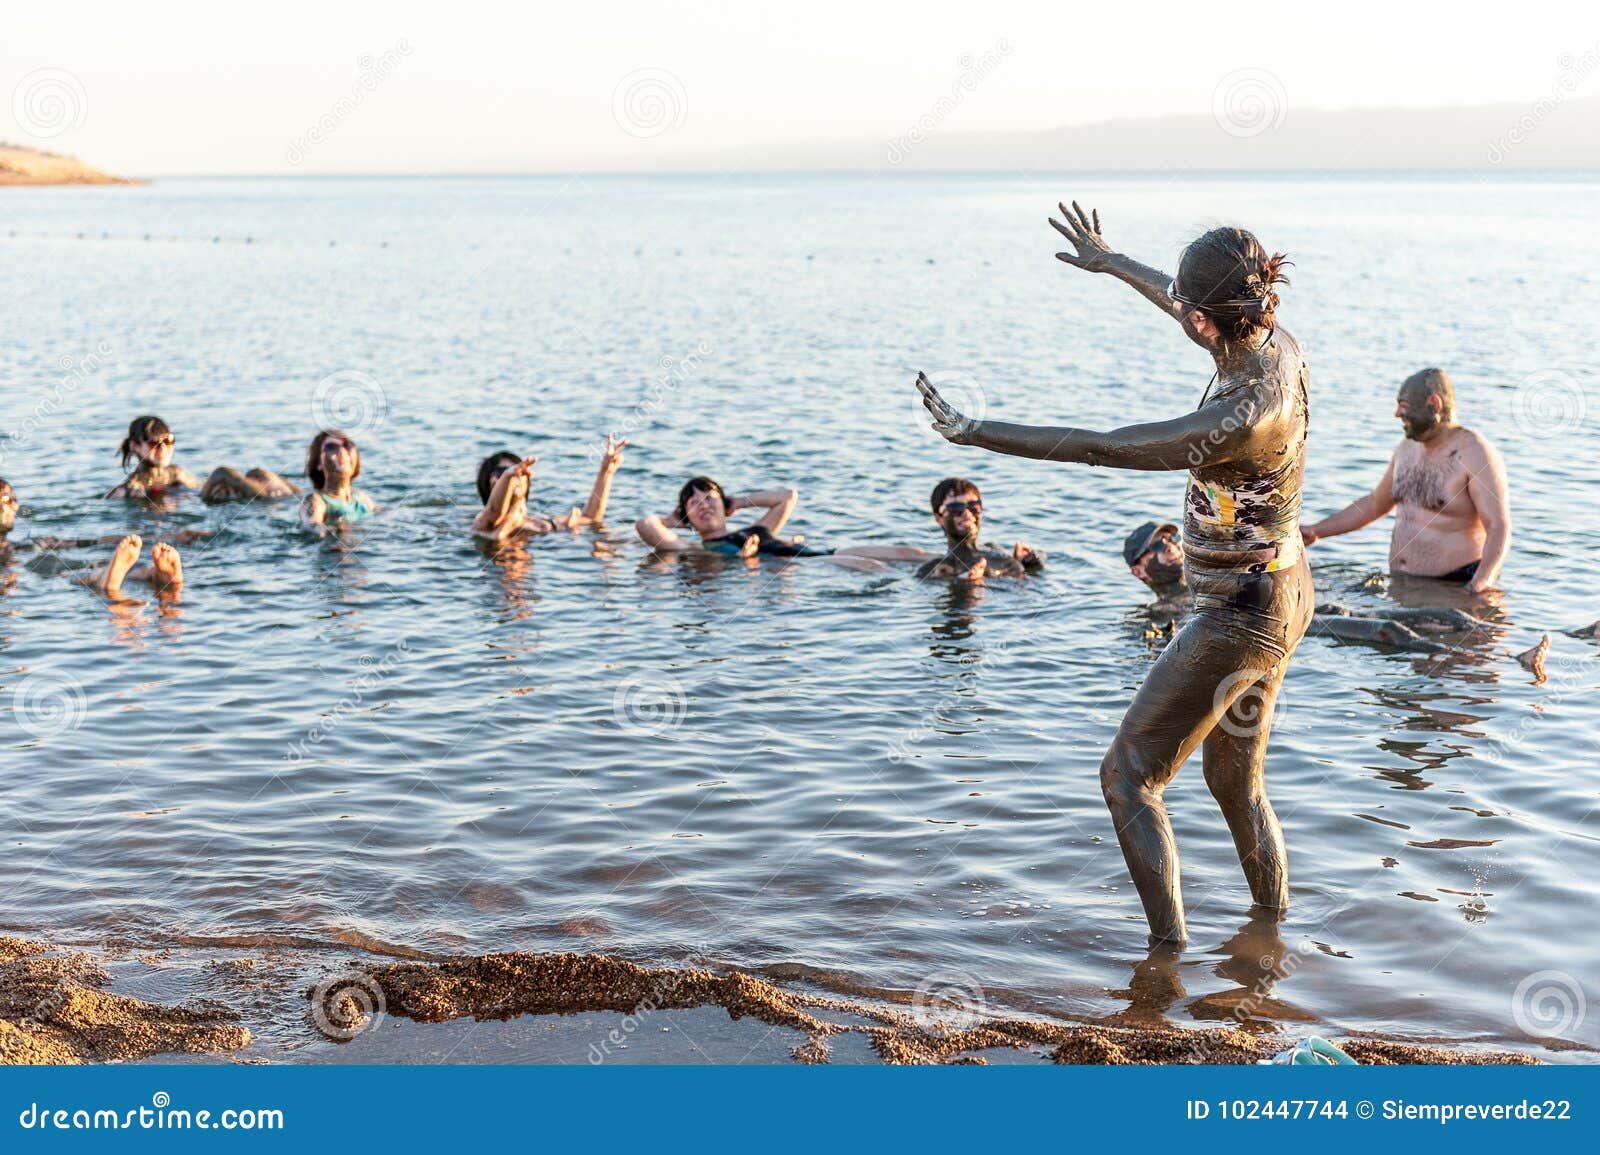 Dead Sea resort, editorial stock image. Image of medical - 102447744